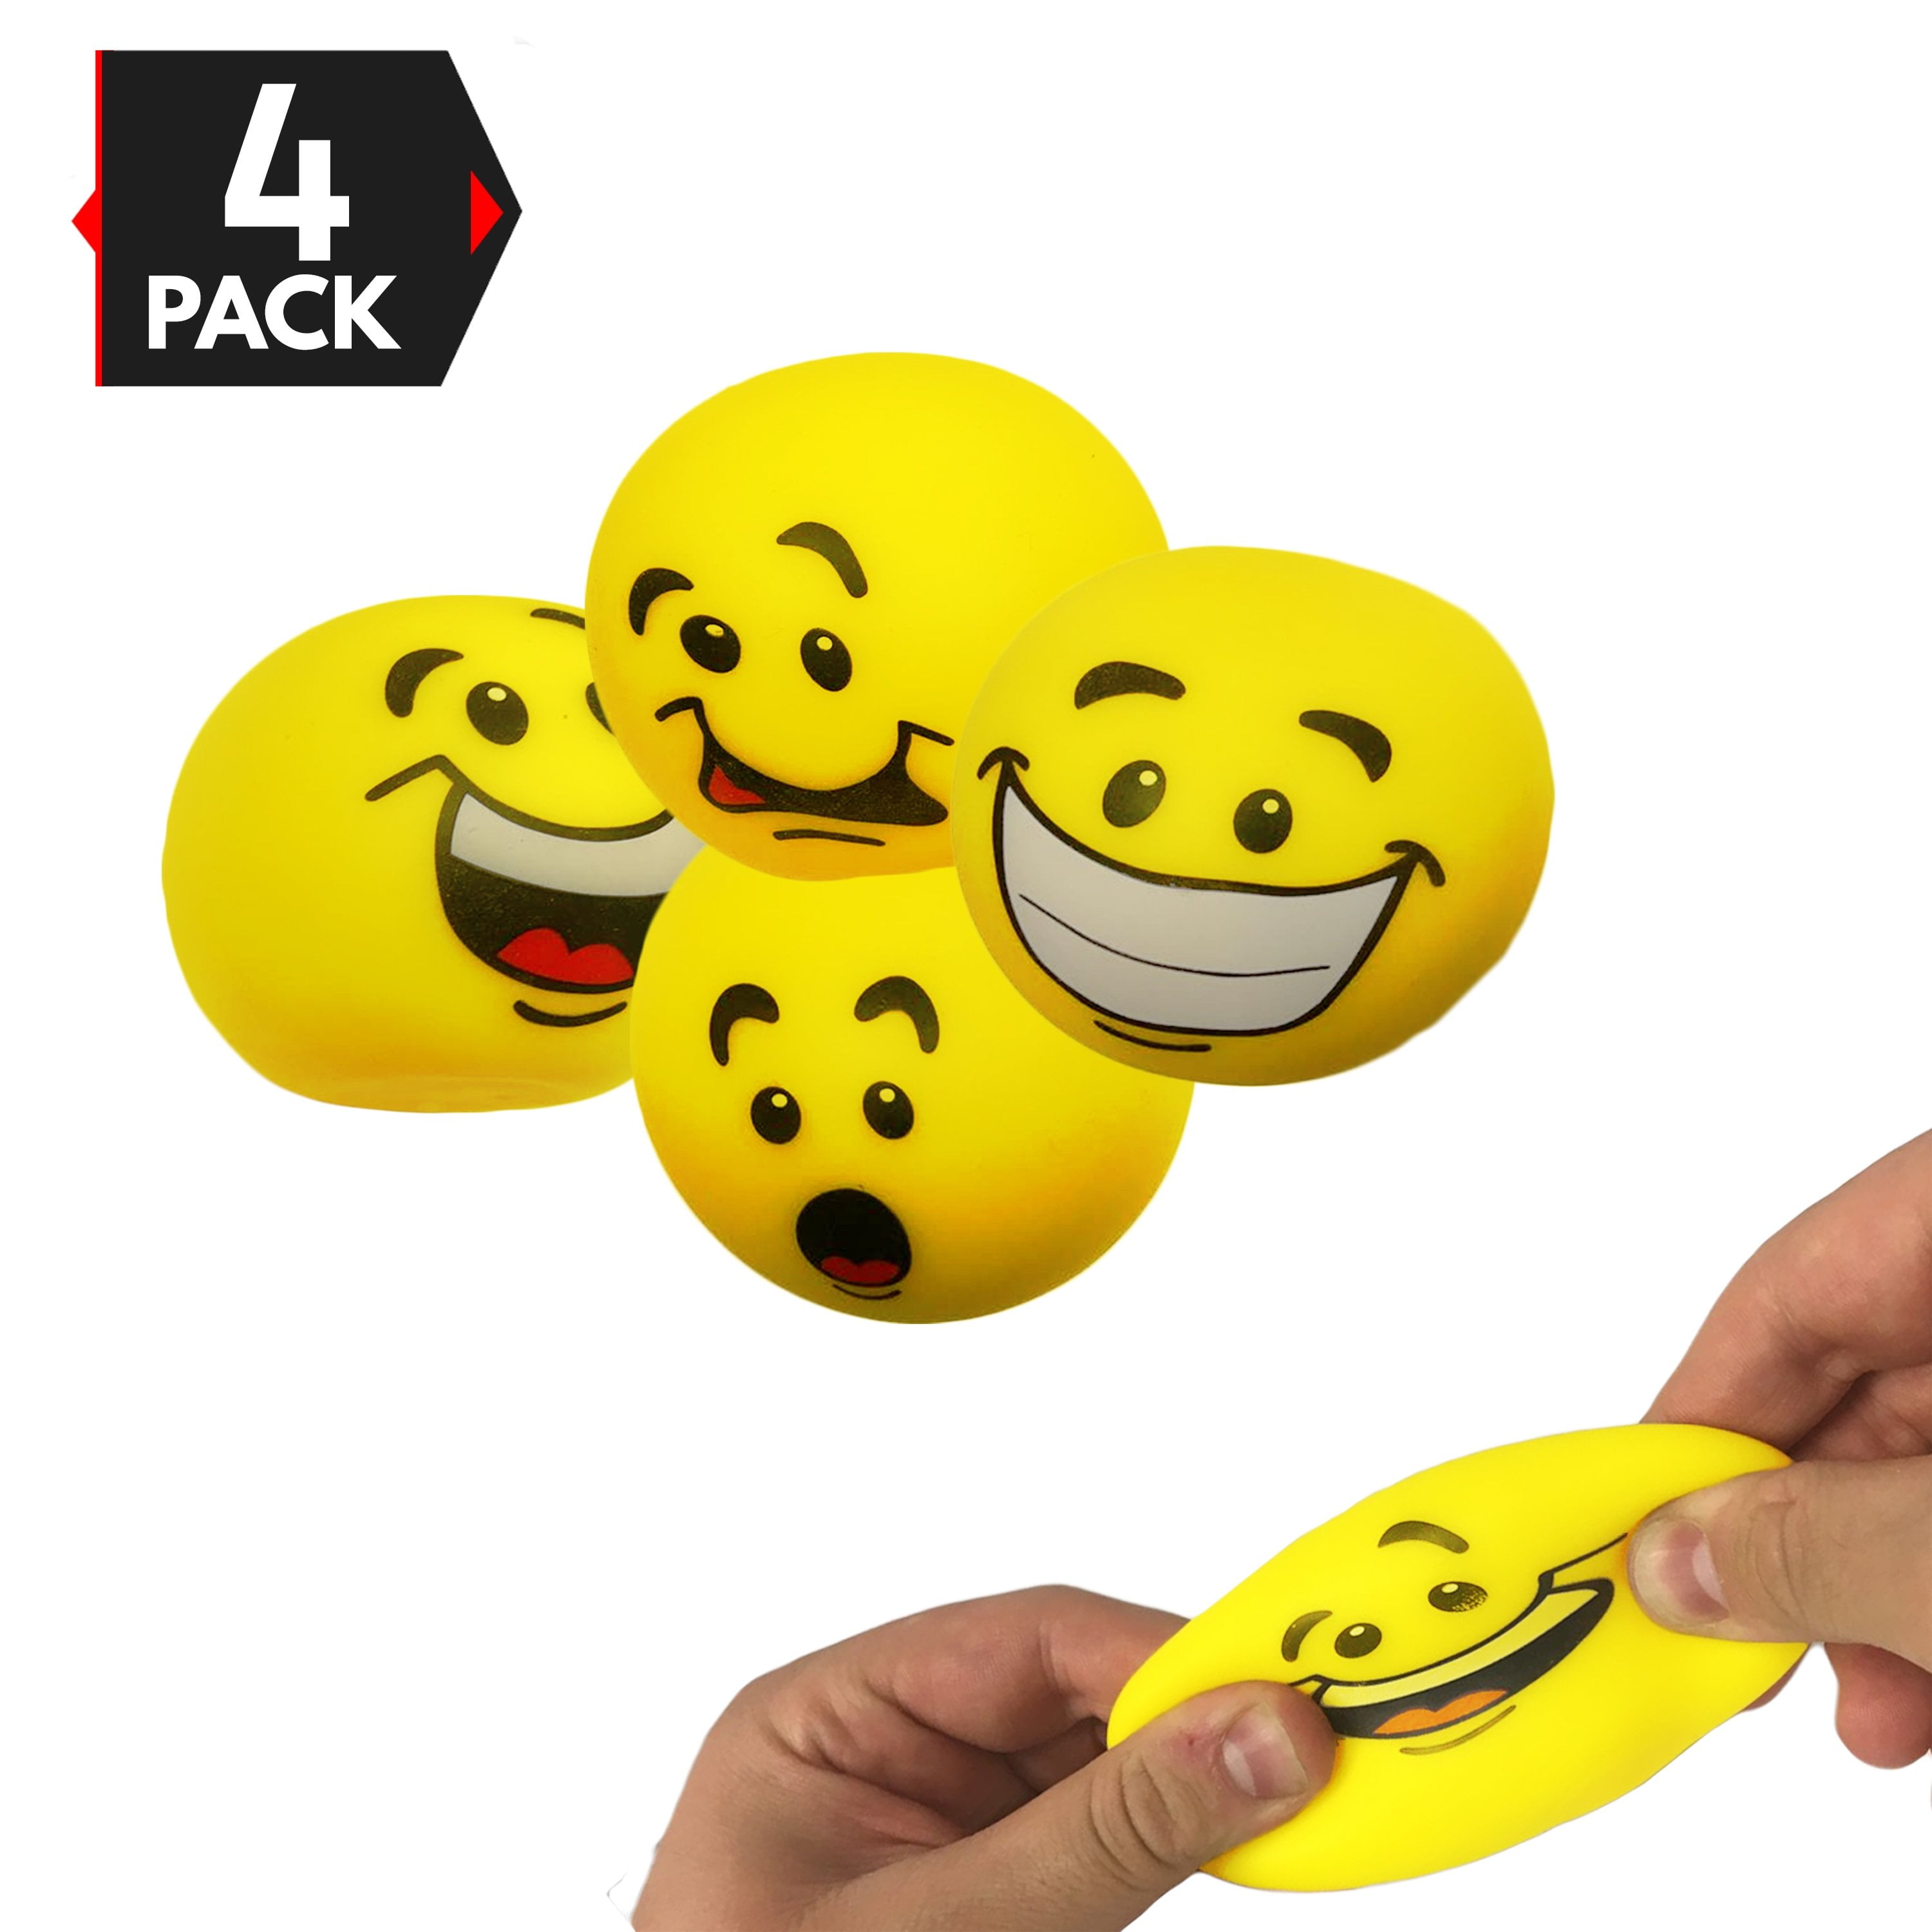 Splat Emoji Rubber Stress Reliever Ball Toy Smiley Face Kids Stocking Filler 